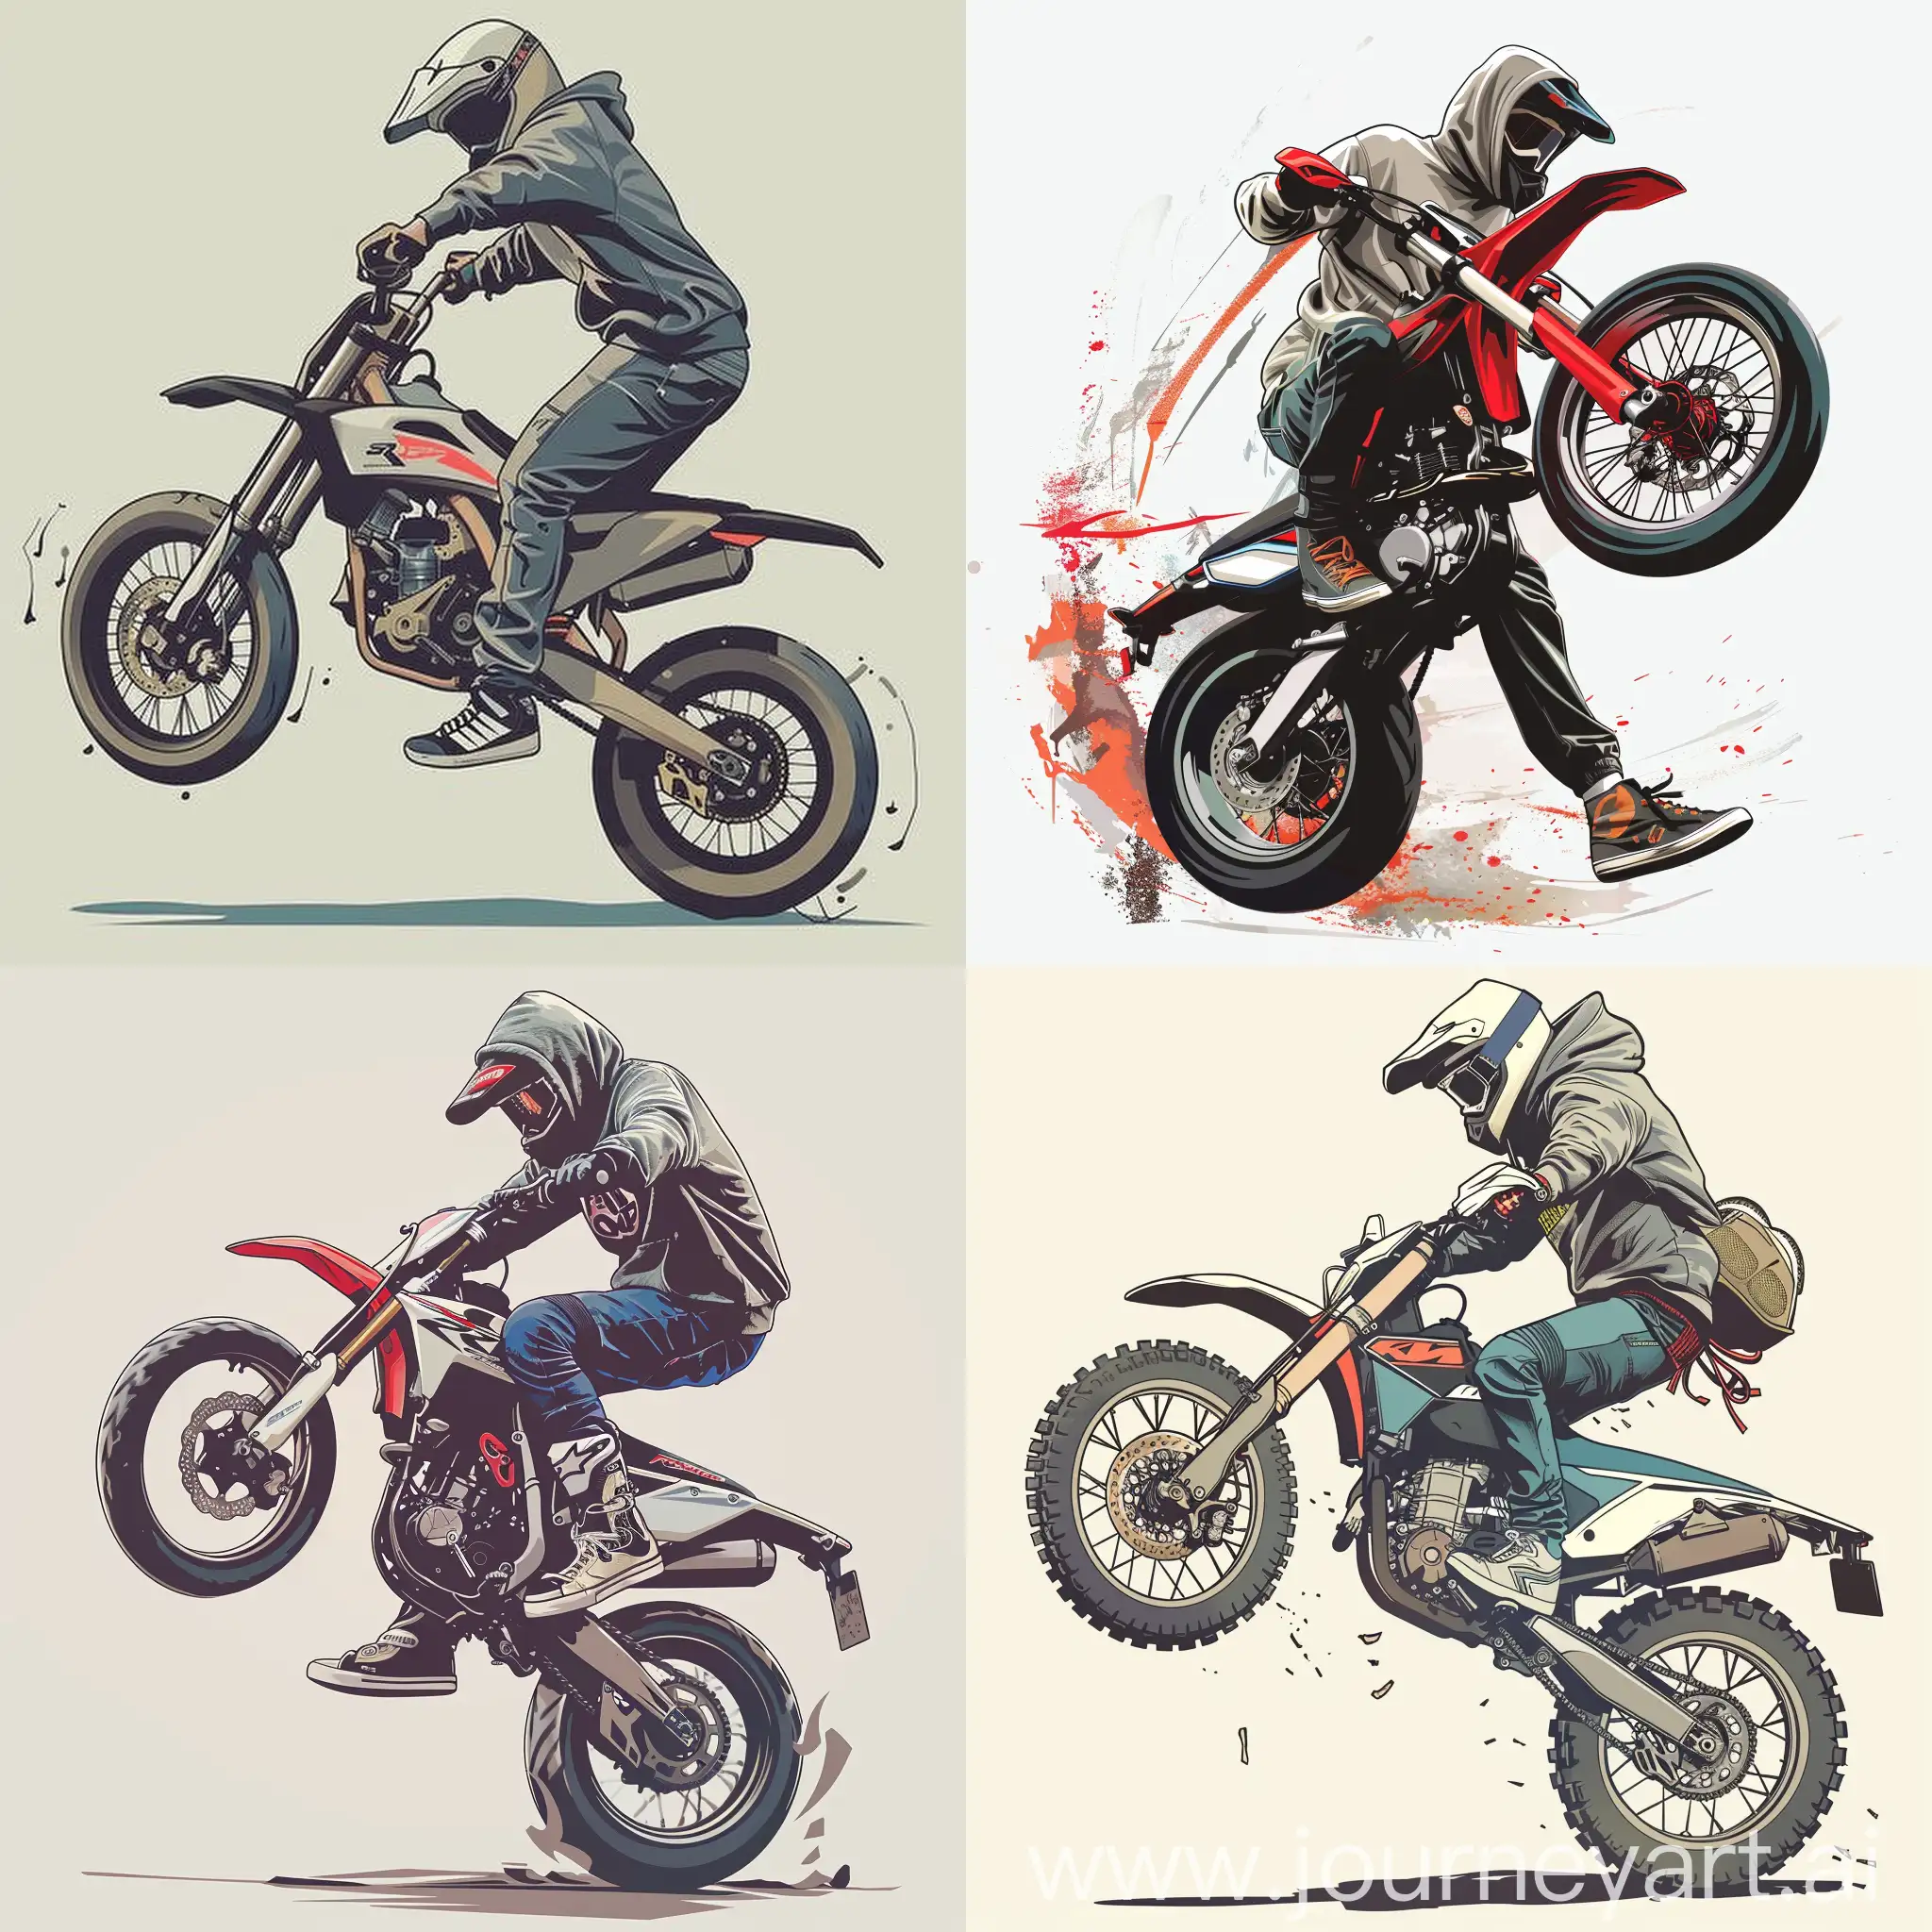 Thrilling-Stunt-Motocyclist-Riding-on-Back-Wheel-on-Enduro-Motorcycle